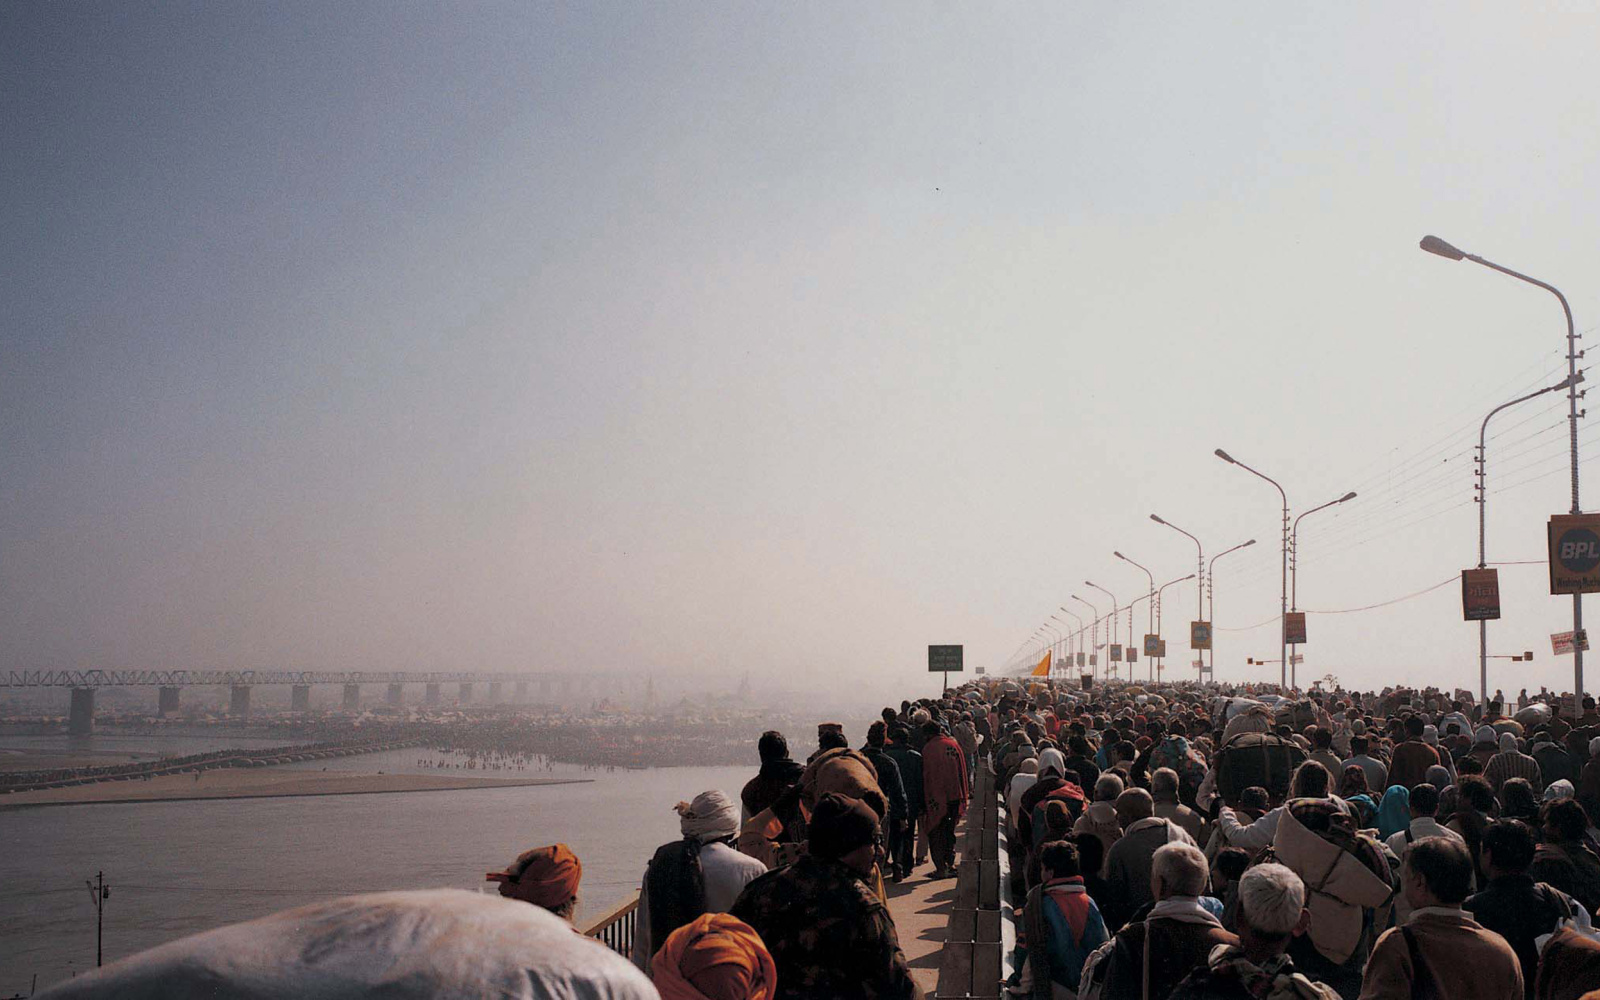 A bridge full of people